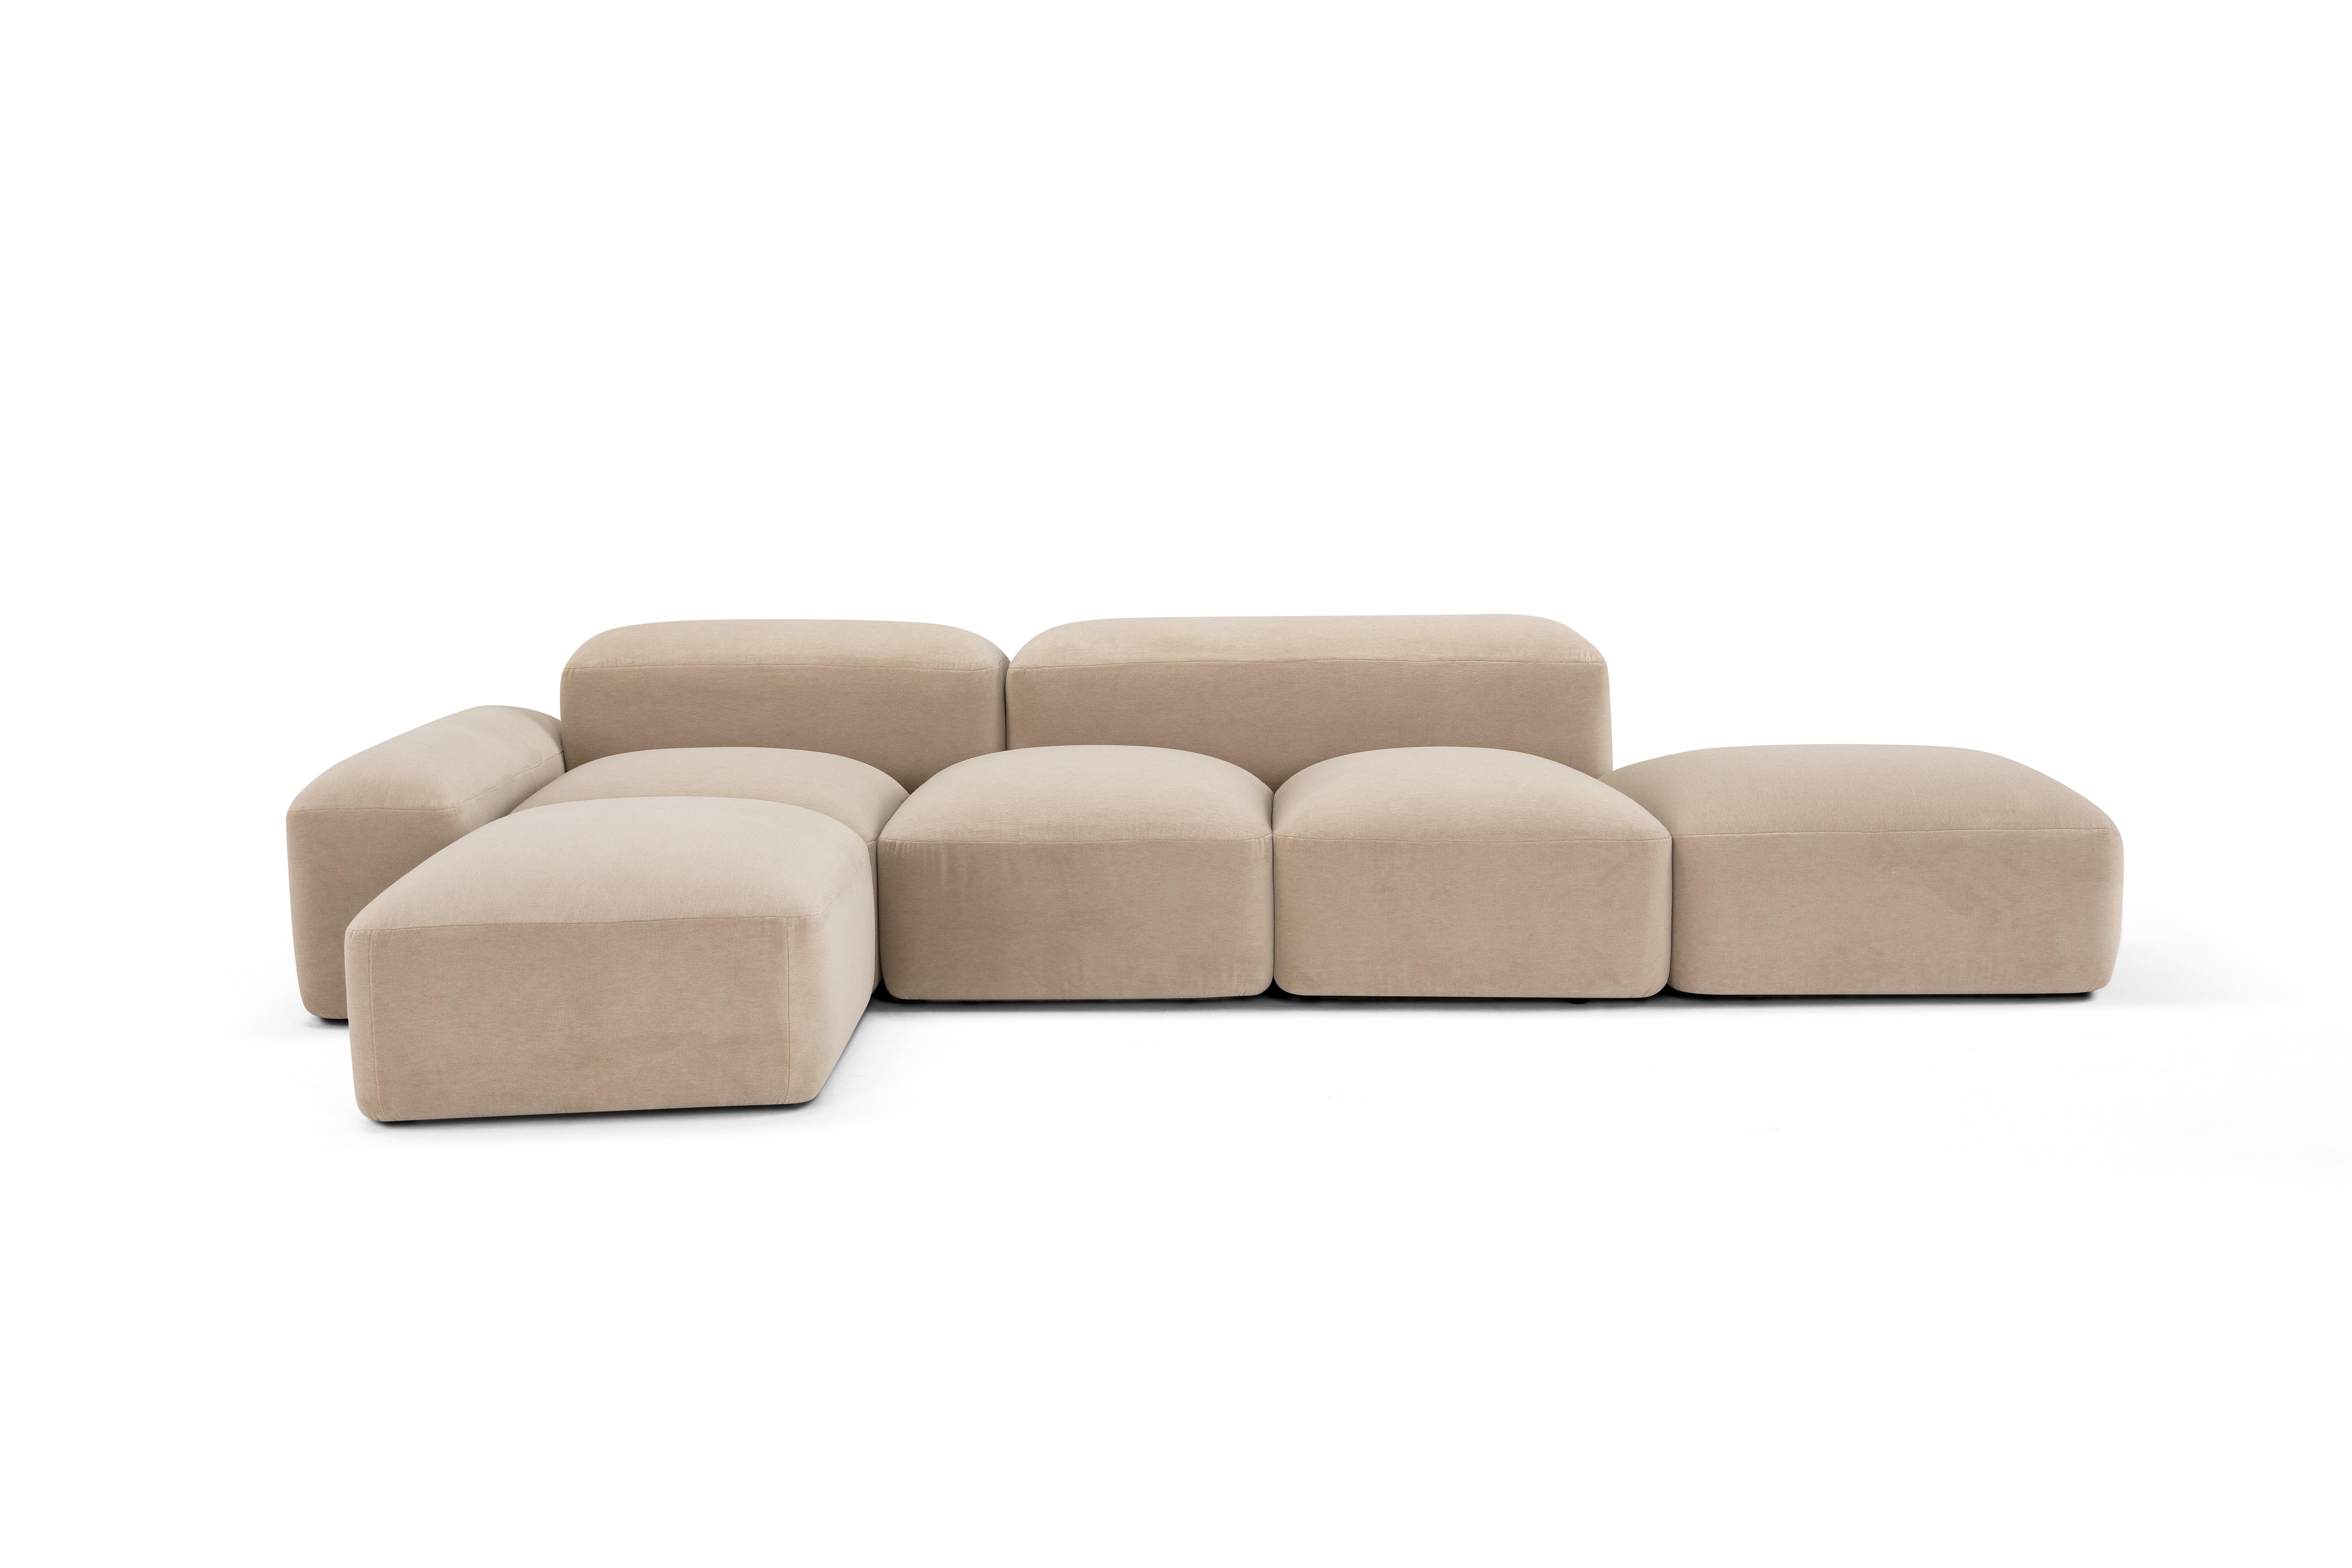 LAPIS sofa by Emanuel Gargano x Amura Lab

Model in stock: E019, Fabric: Ortisei (white bouclé).